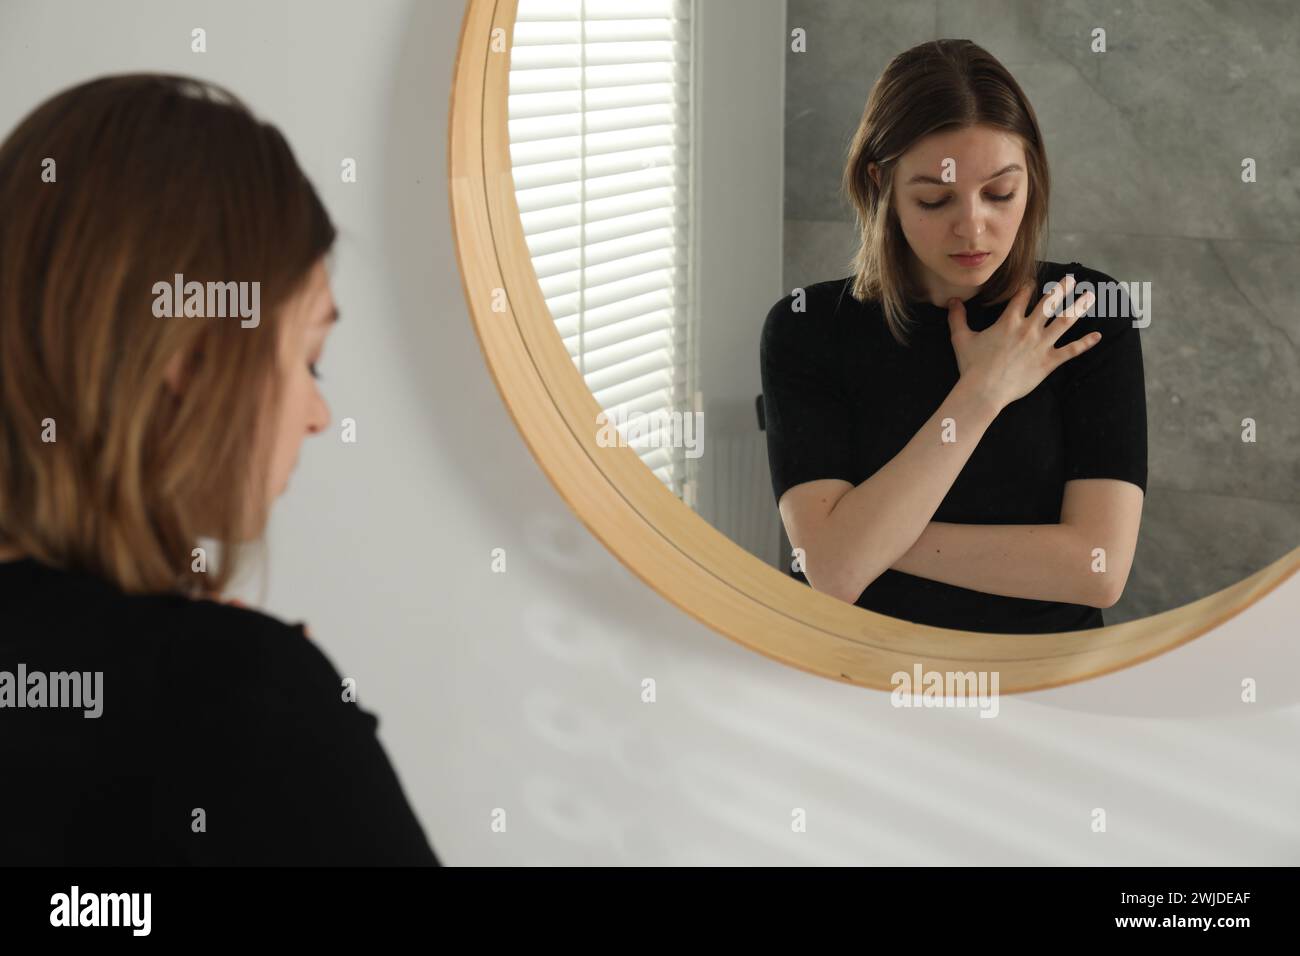 Sad young woman near mirror in room Stock Photo